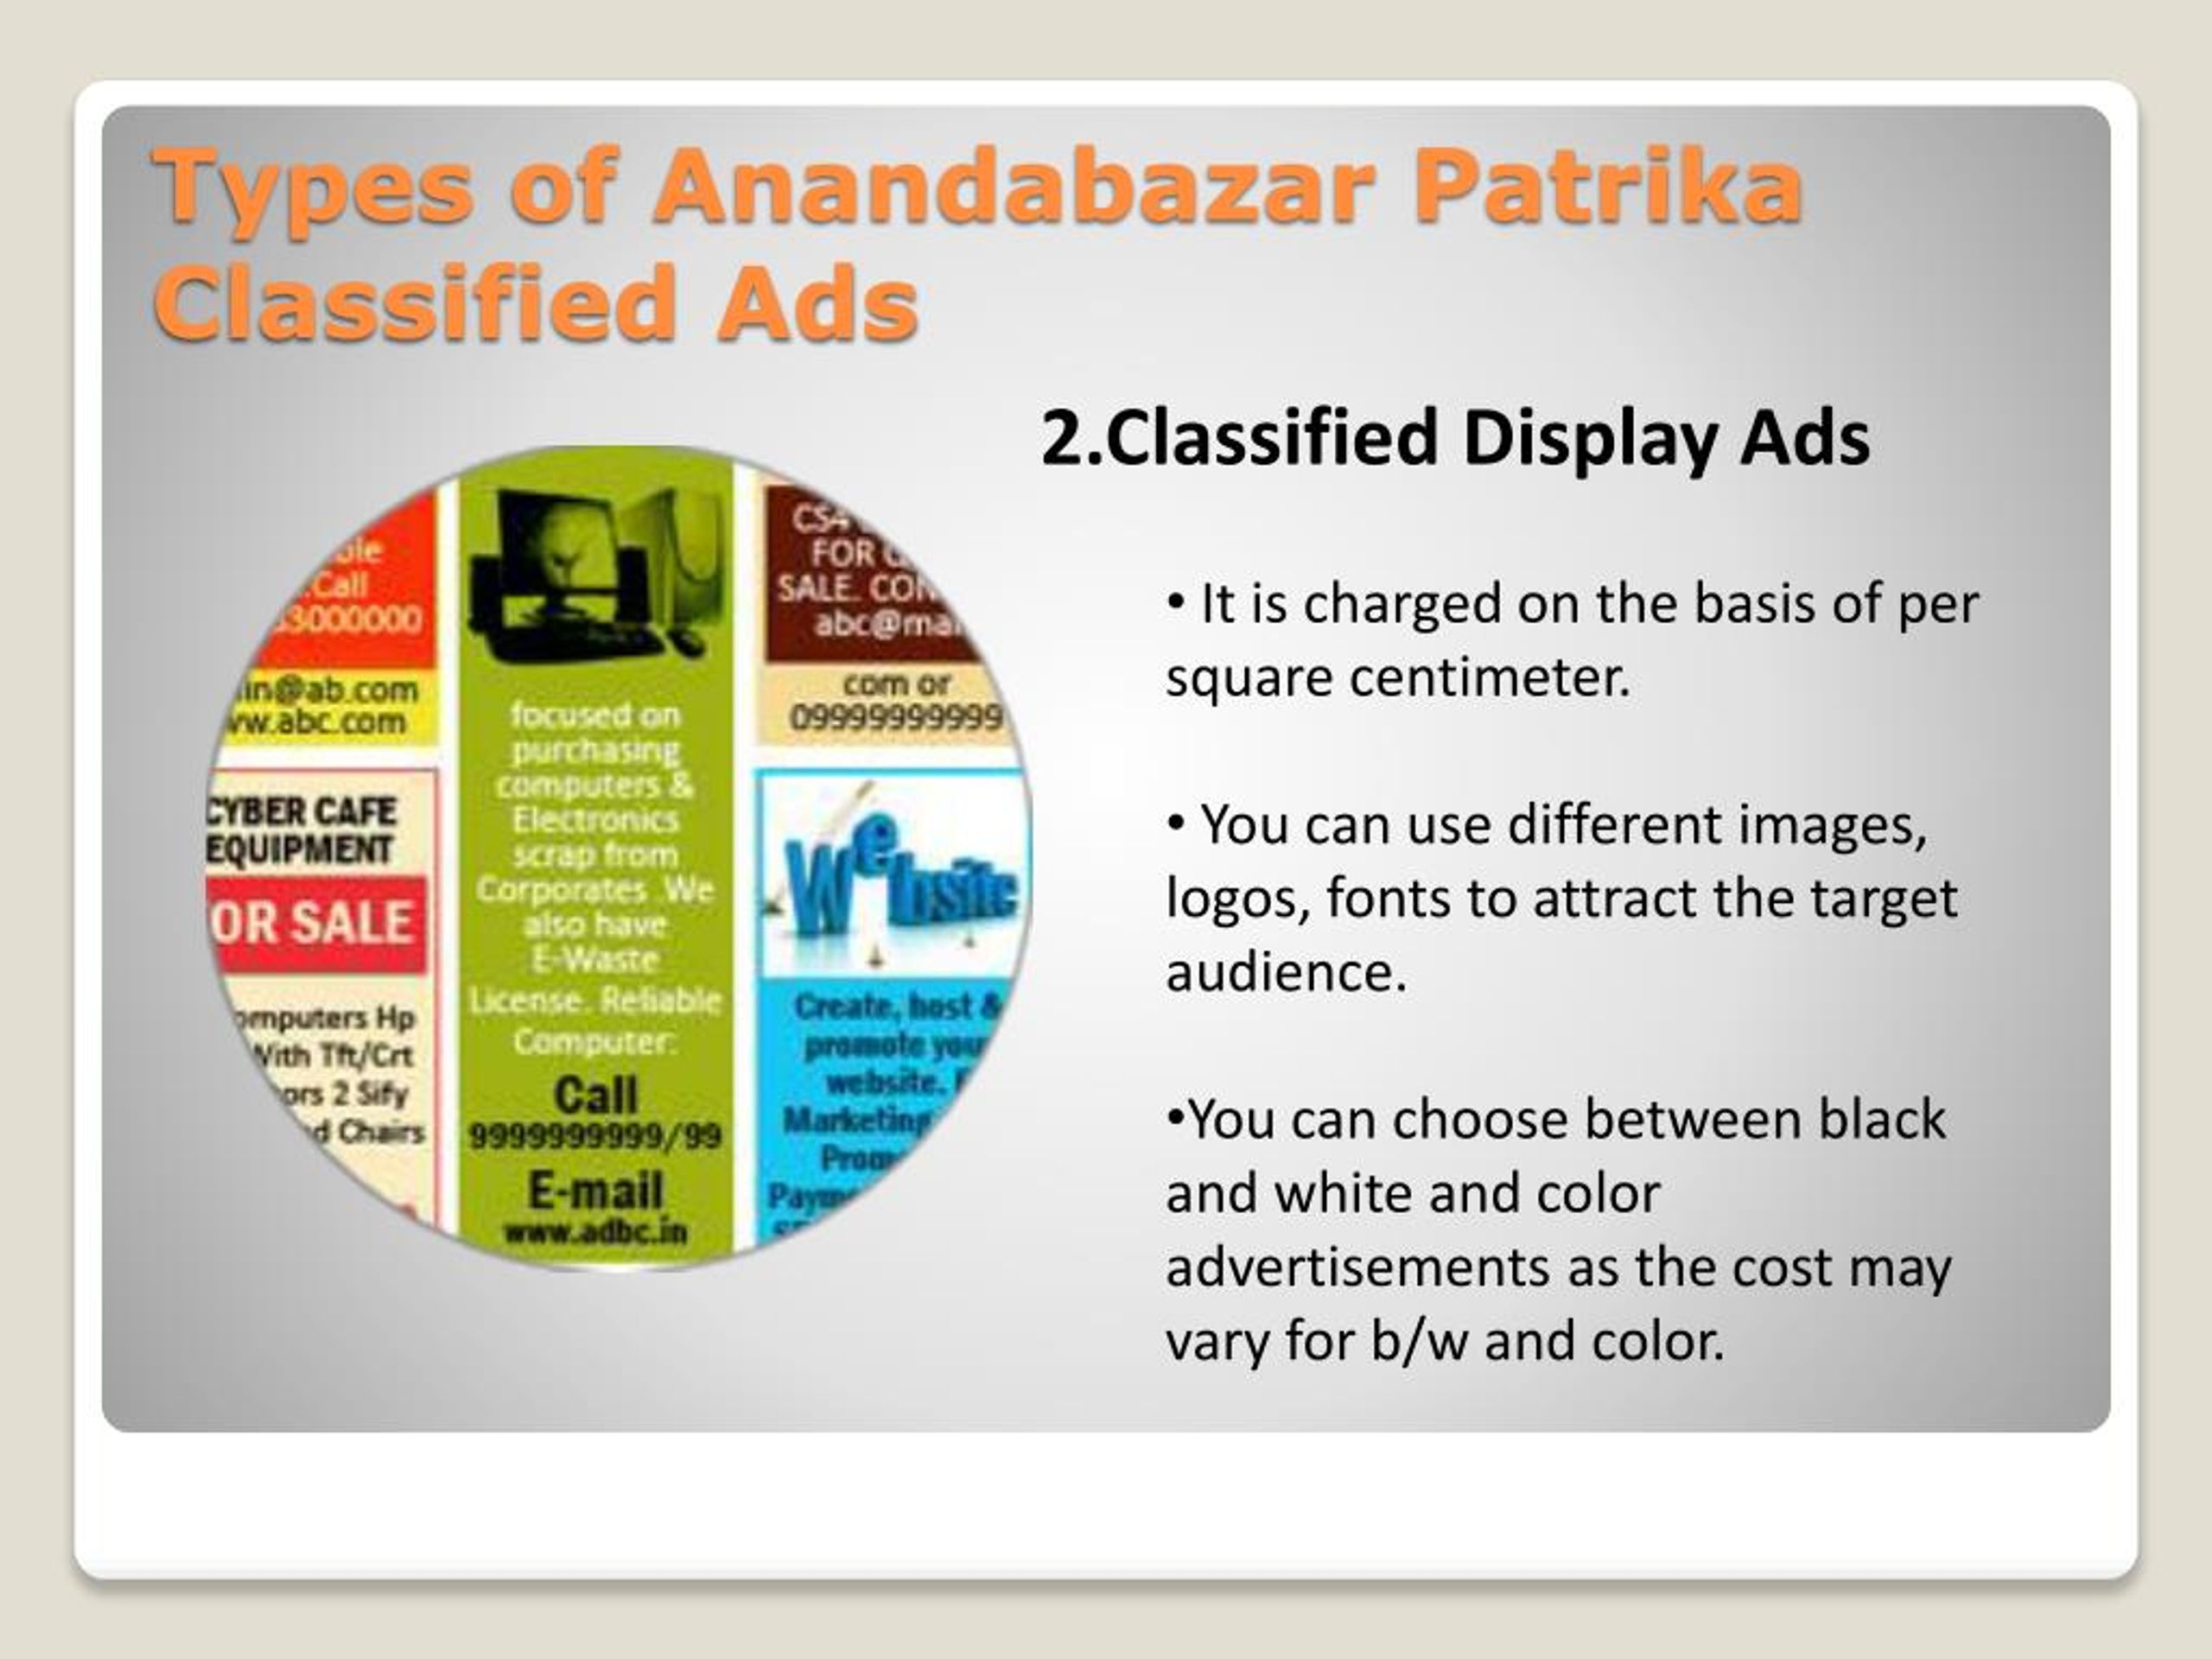 2.Classified Display Ads.